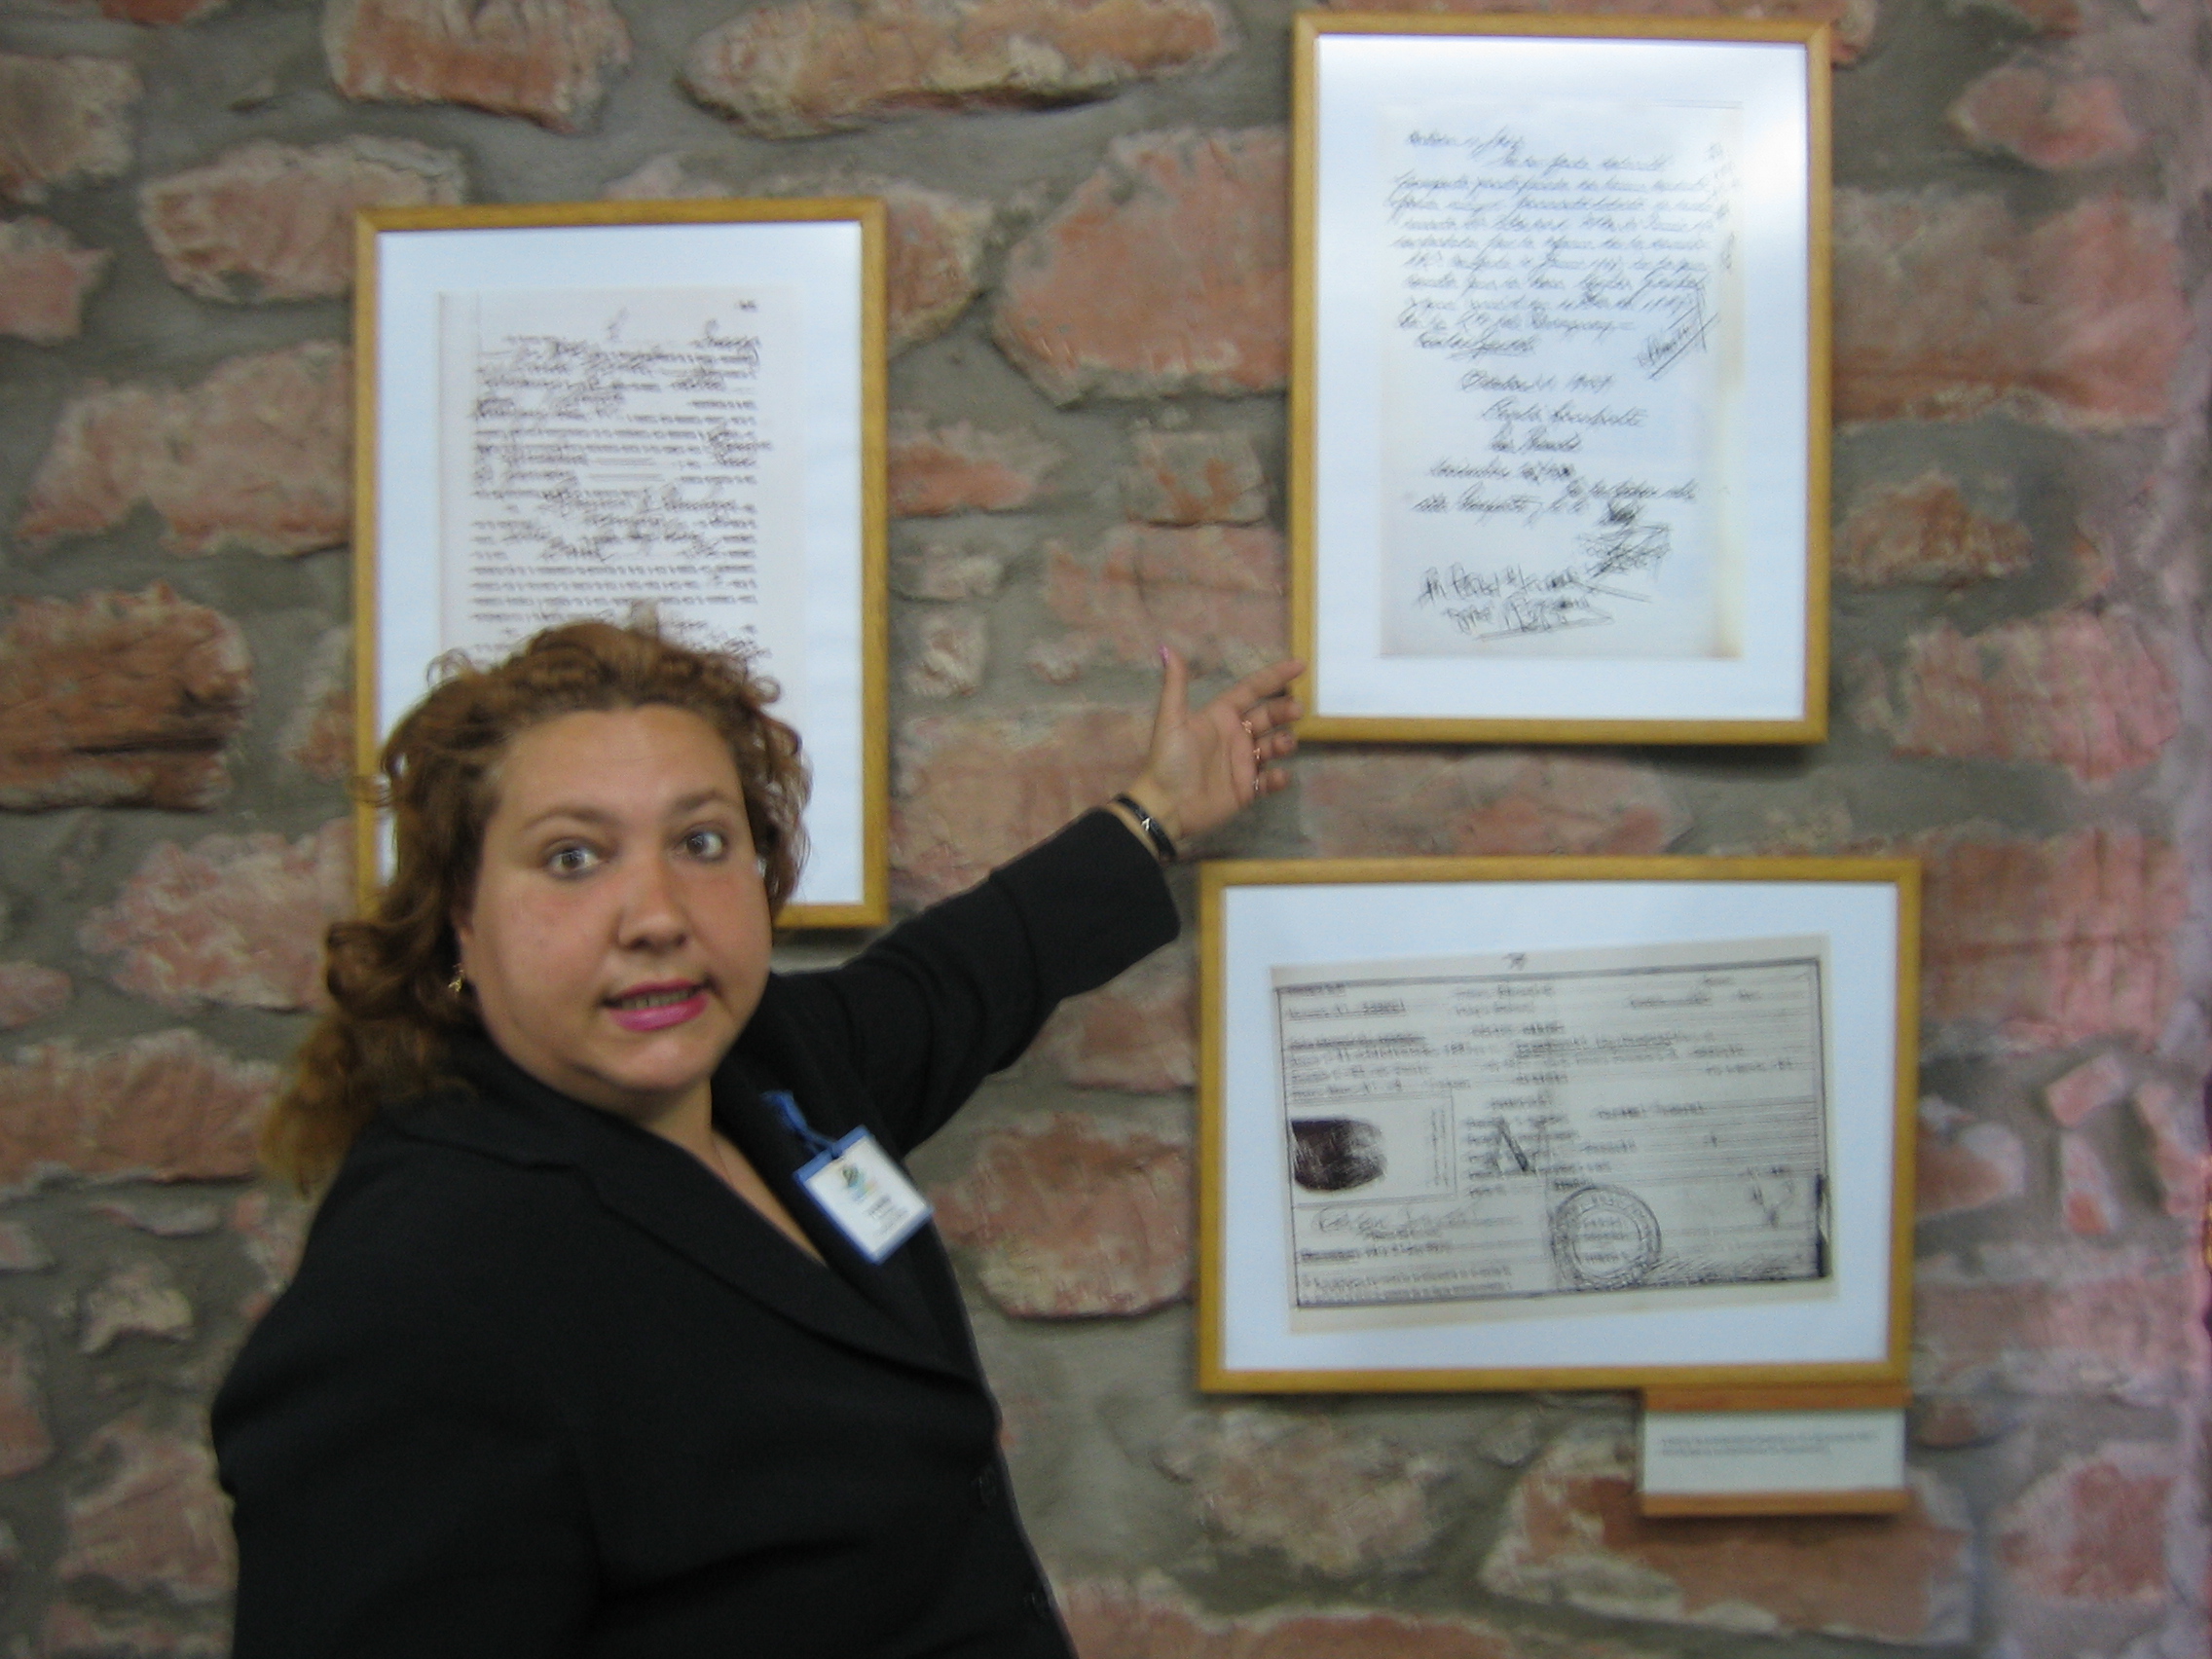 Museumsführerin Veronica zeigt Beweisdokumente für Gardels uruguayische Herkunft